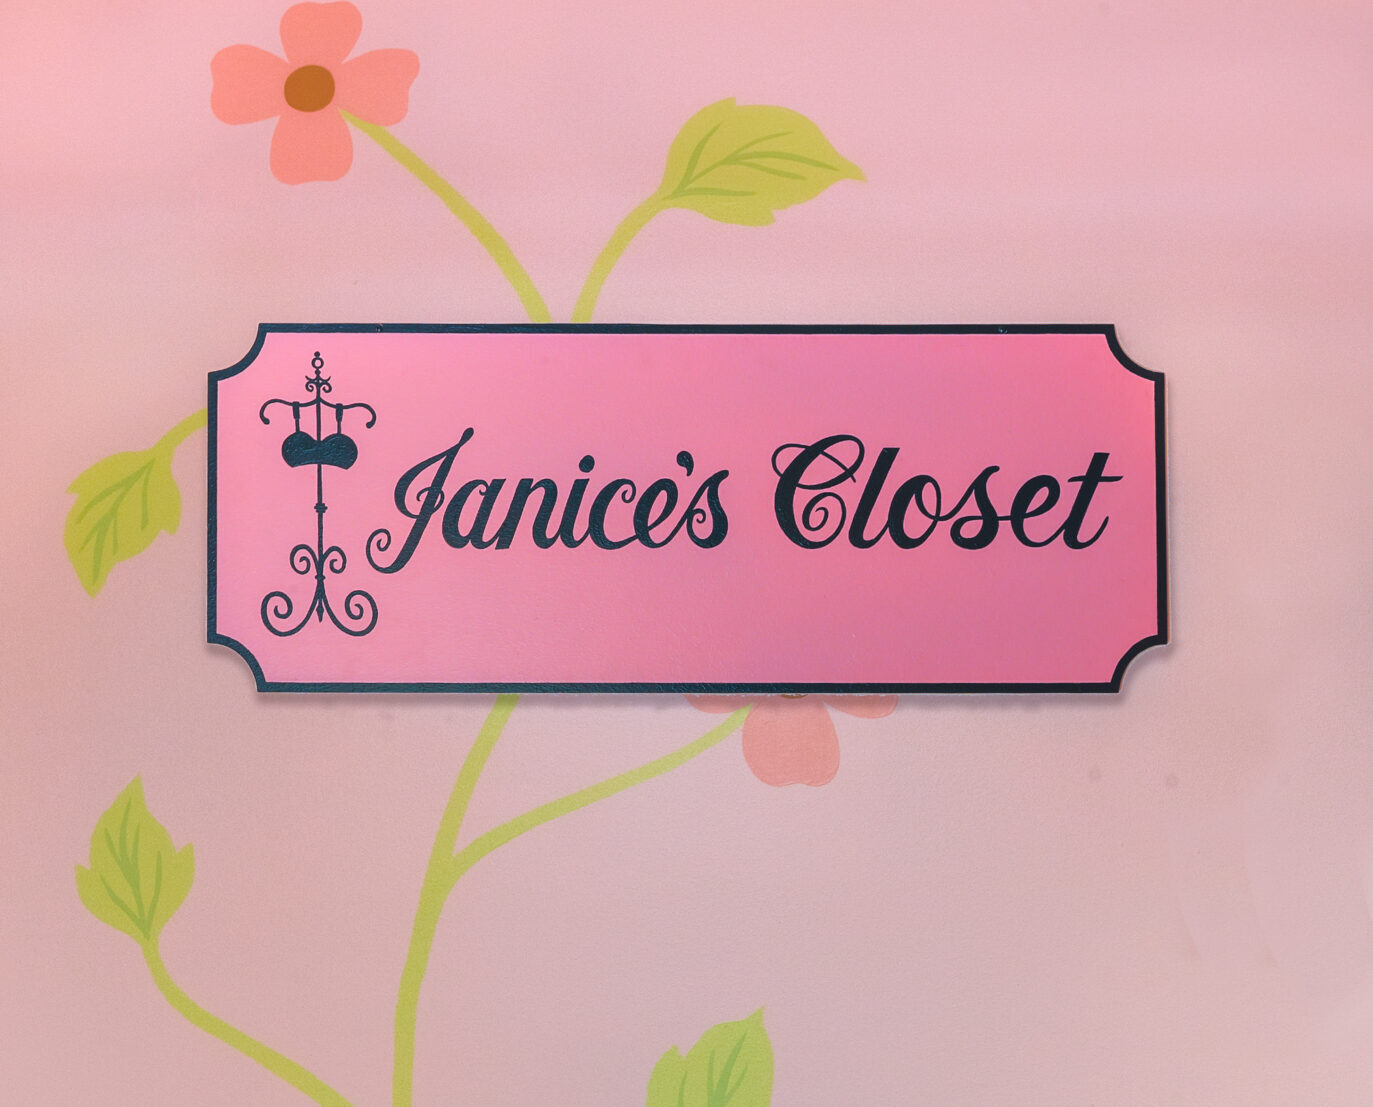 Janices Closet wall